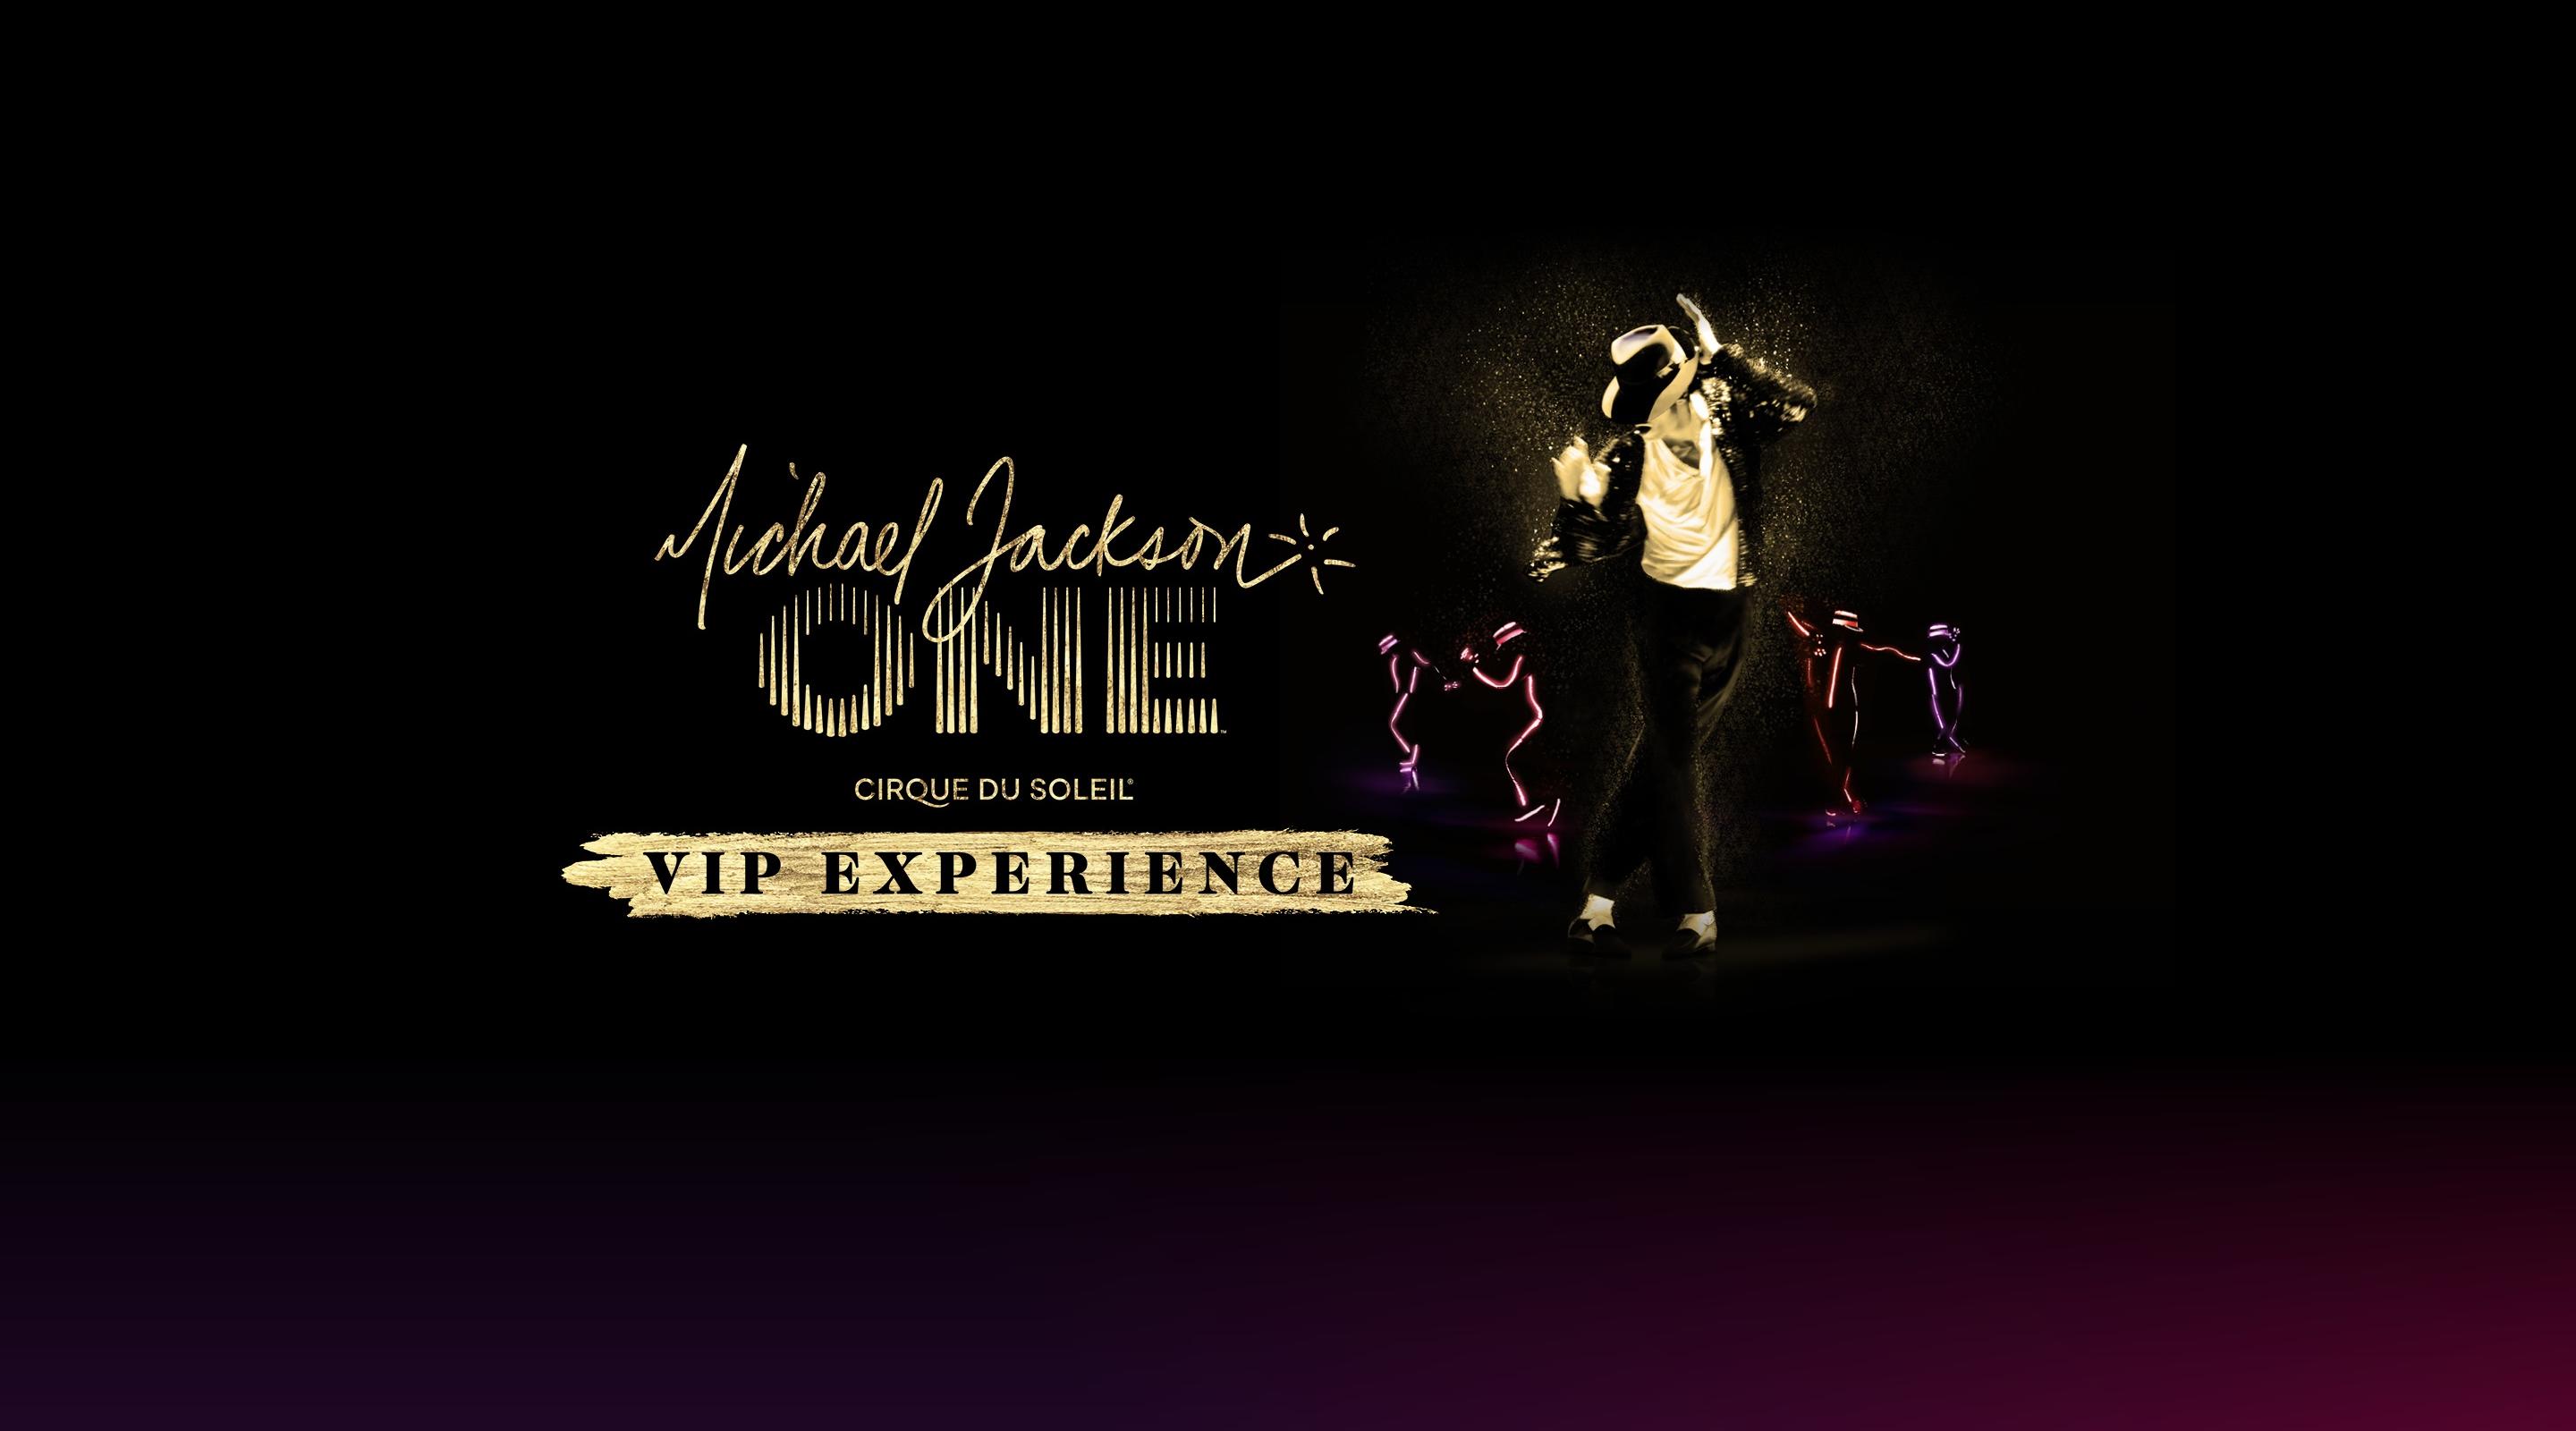 Michael Jackson ONE VIP Experience image.